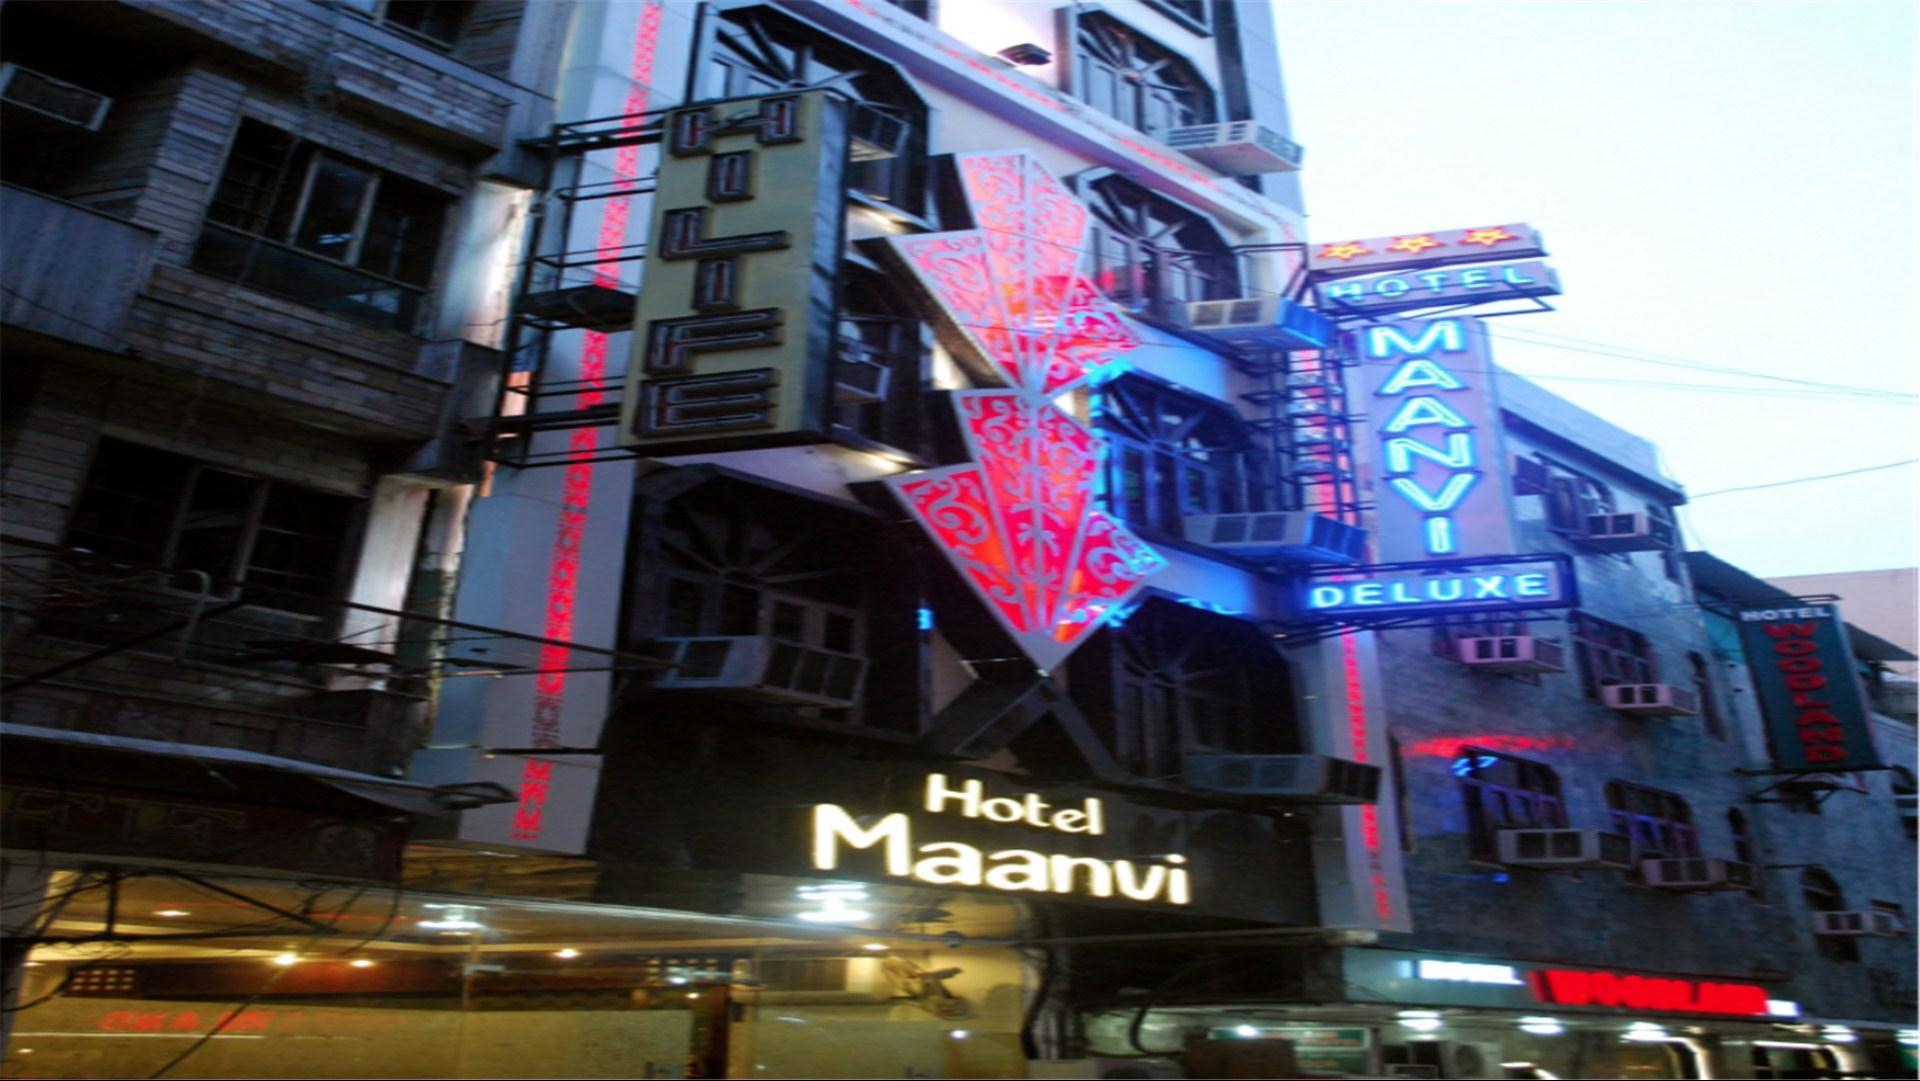 Hotel Maanvi in New Delhi, IN